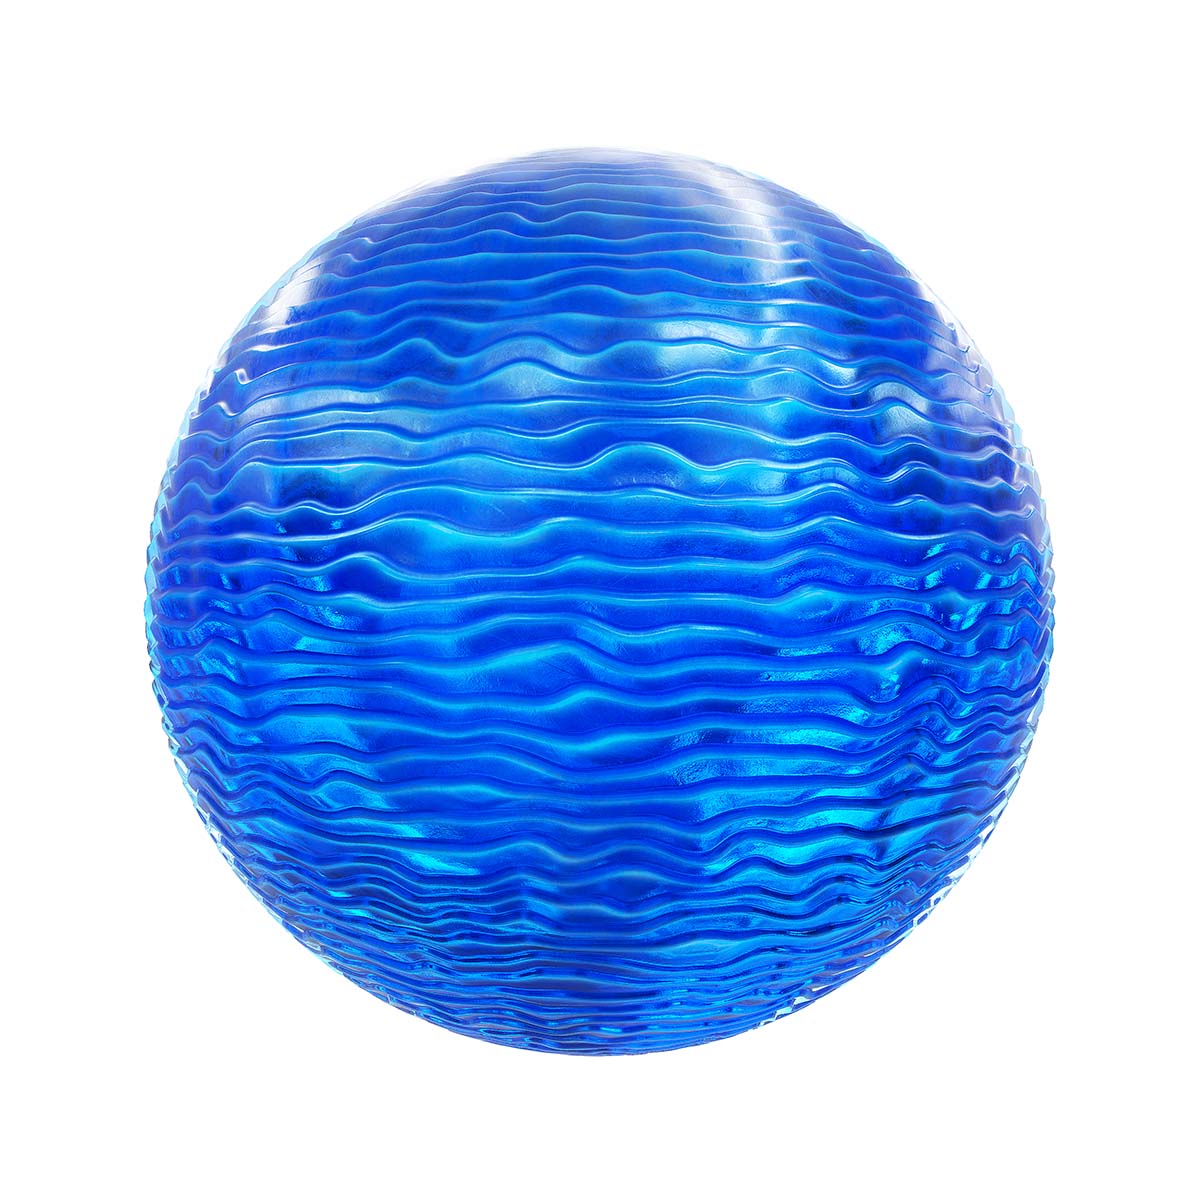 Blue Wavy Glass PBR Texture